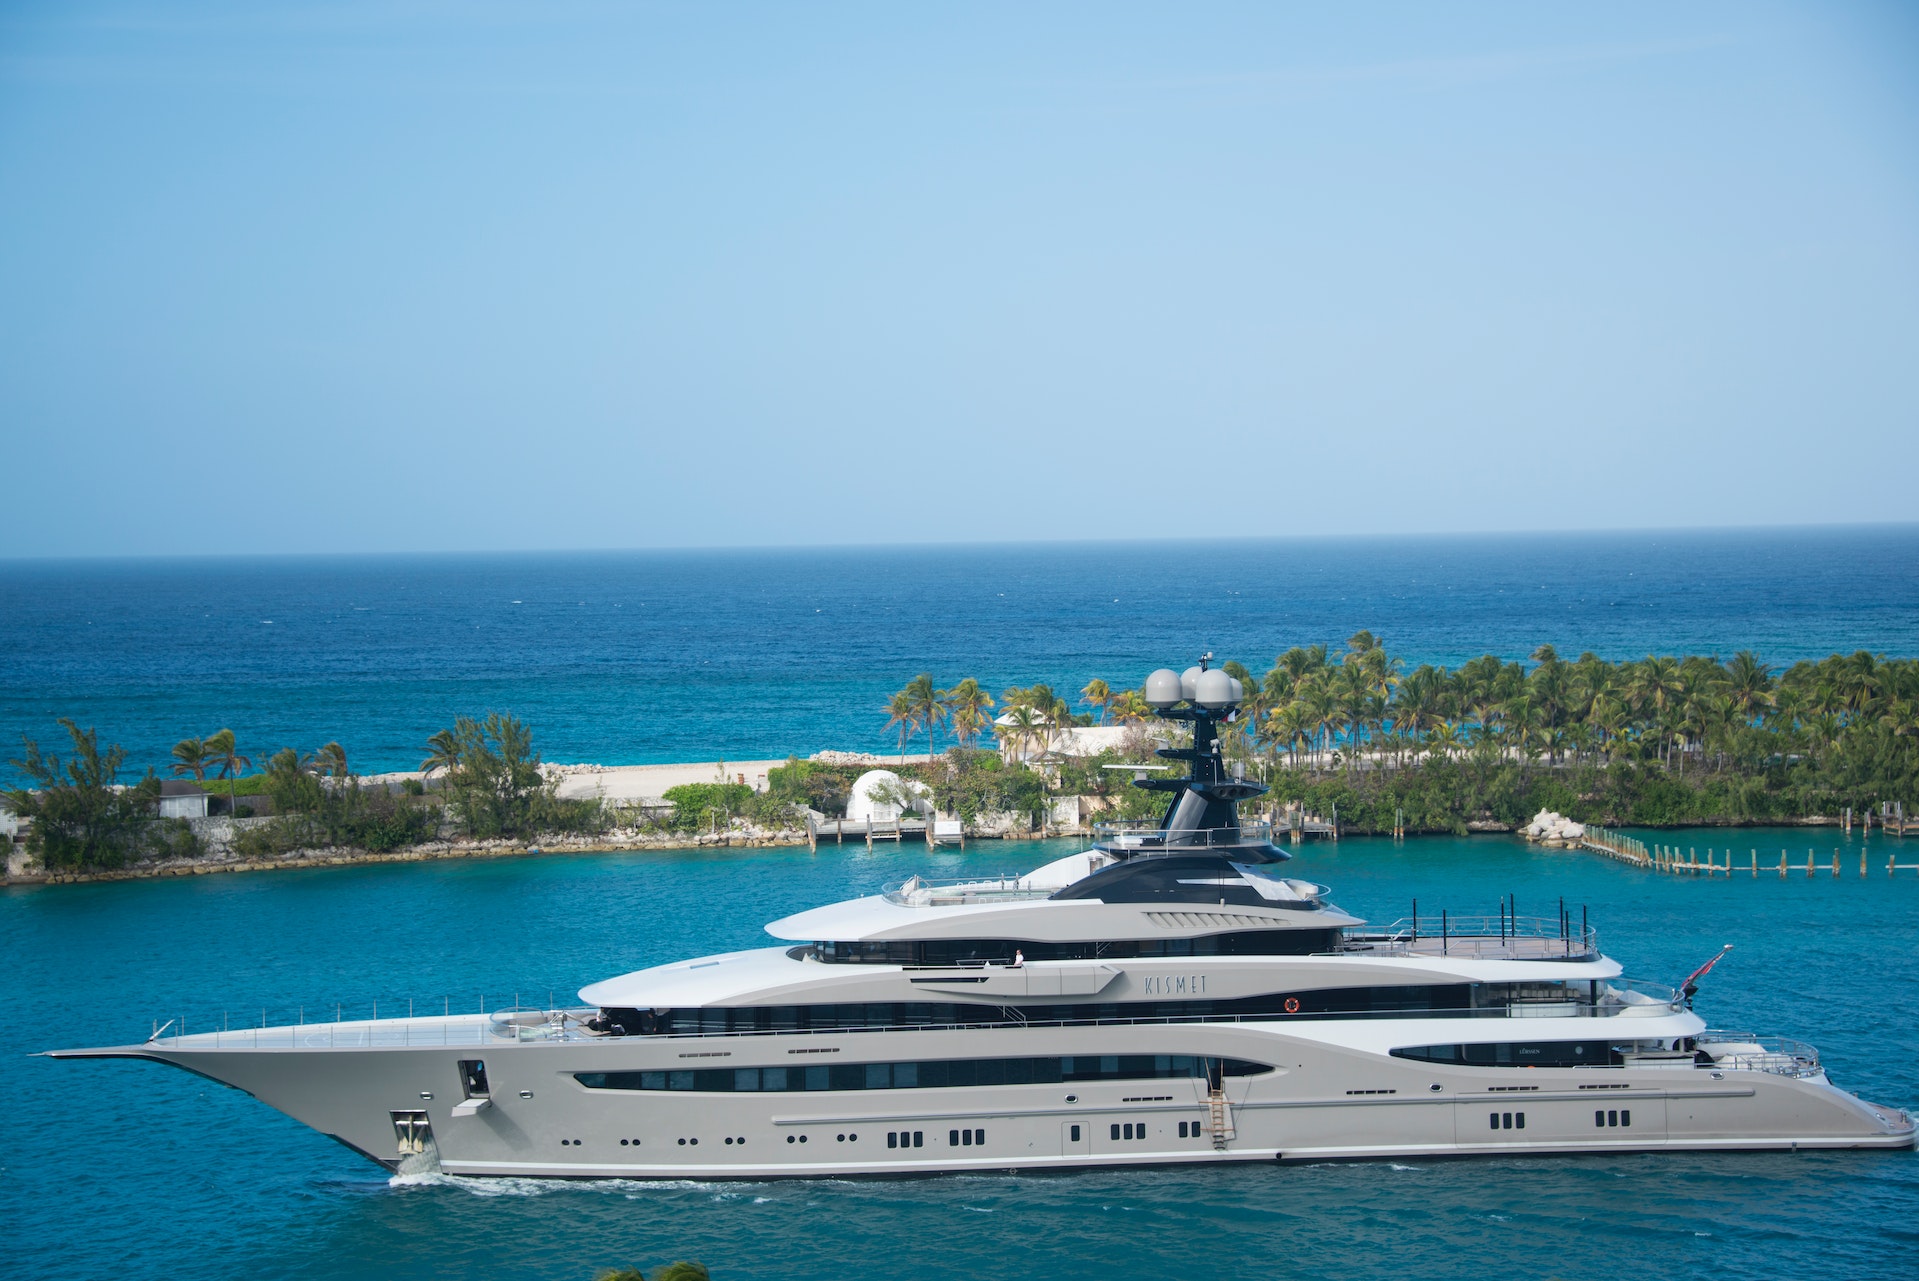 Luxury Yacht on Body of Water